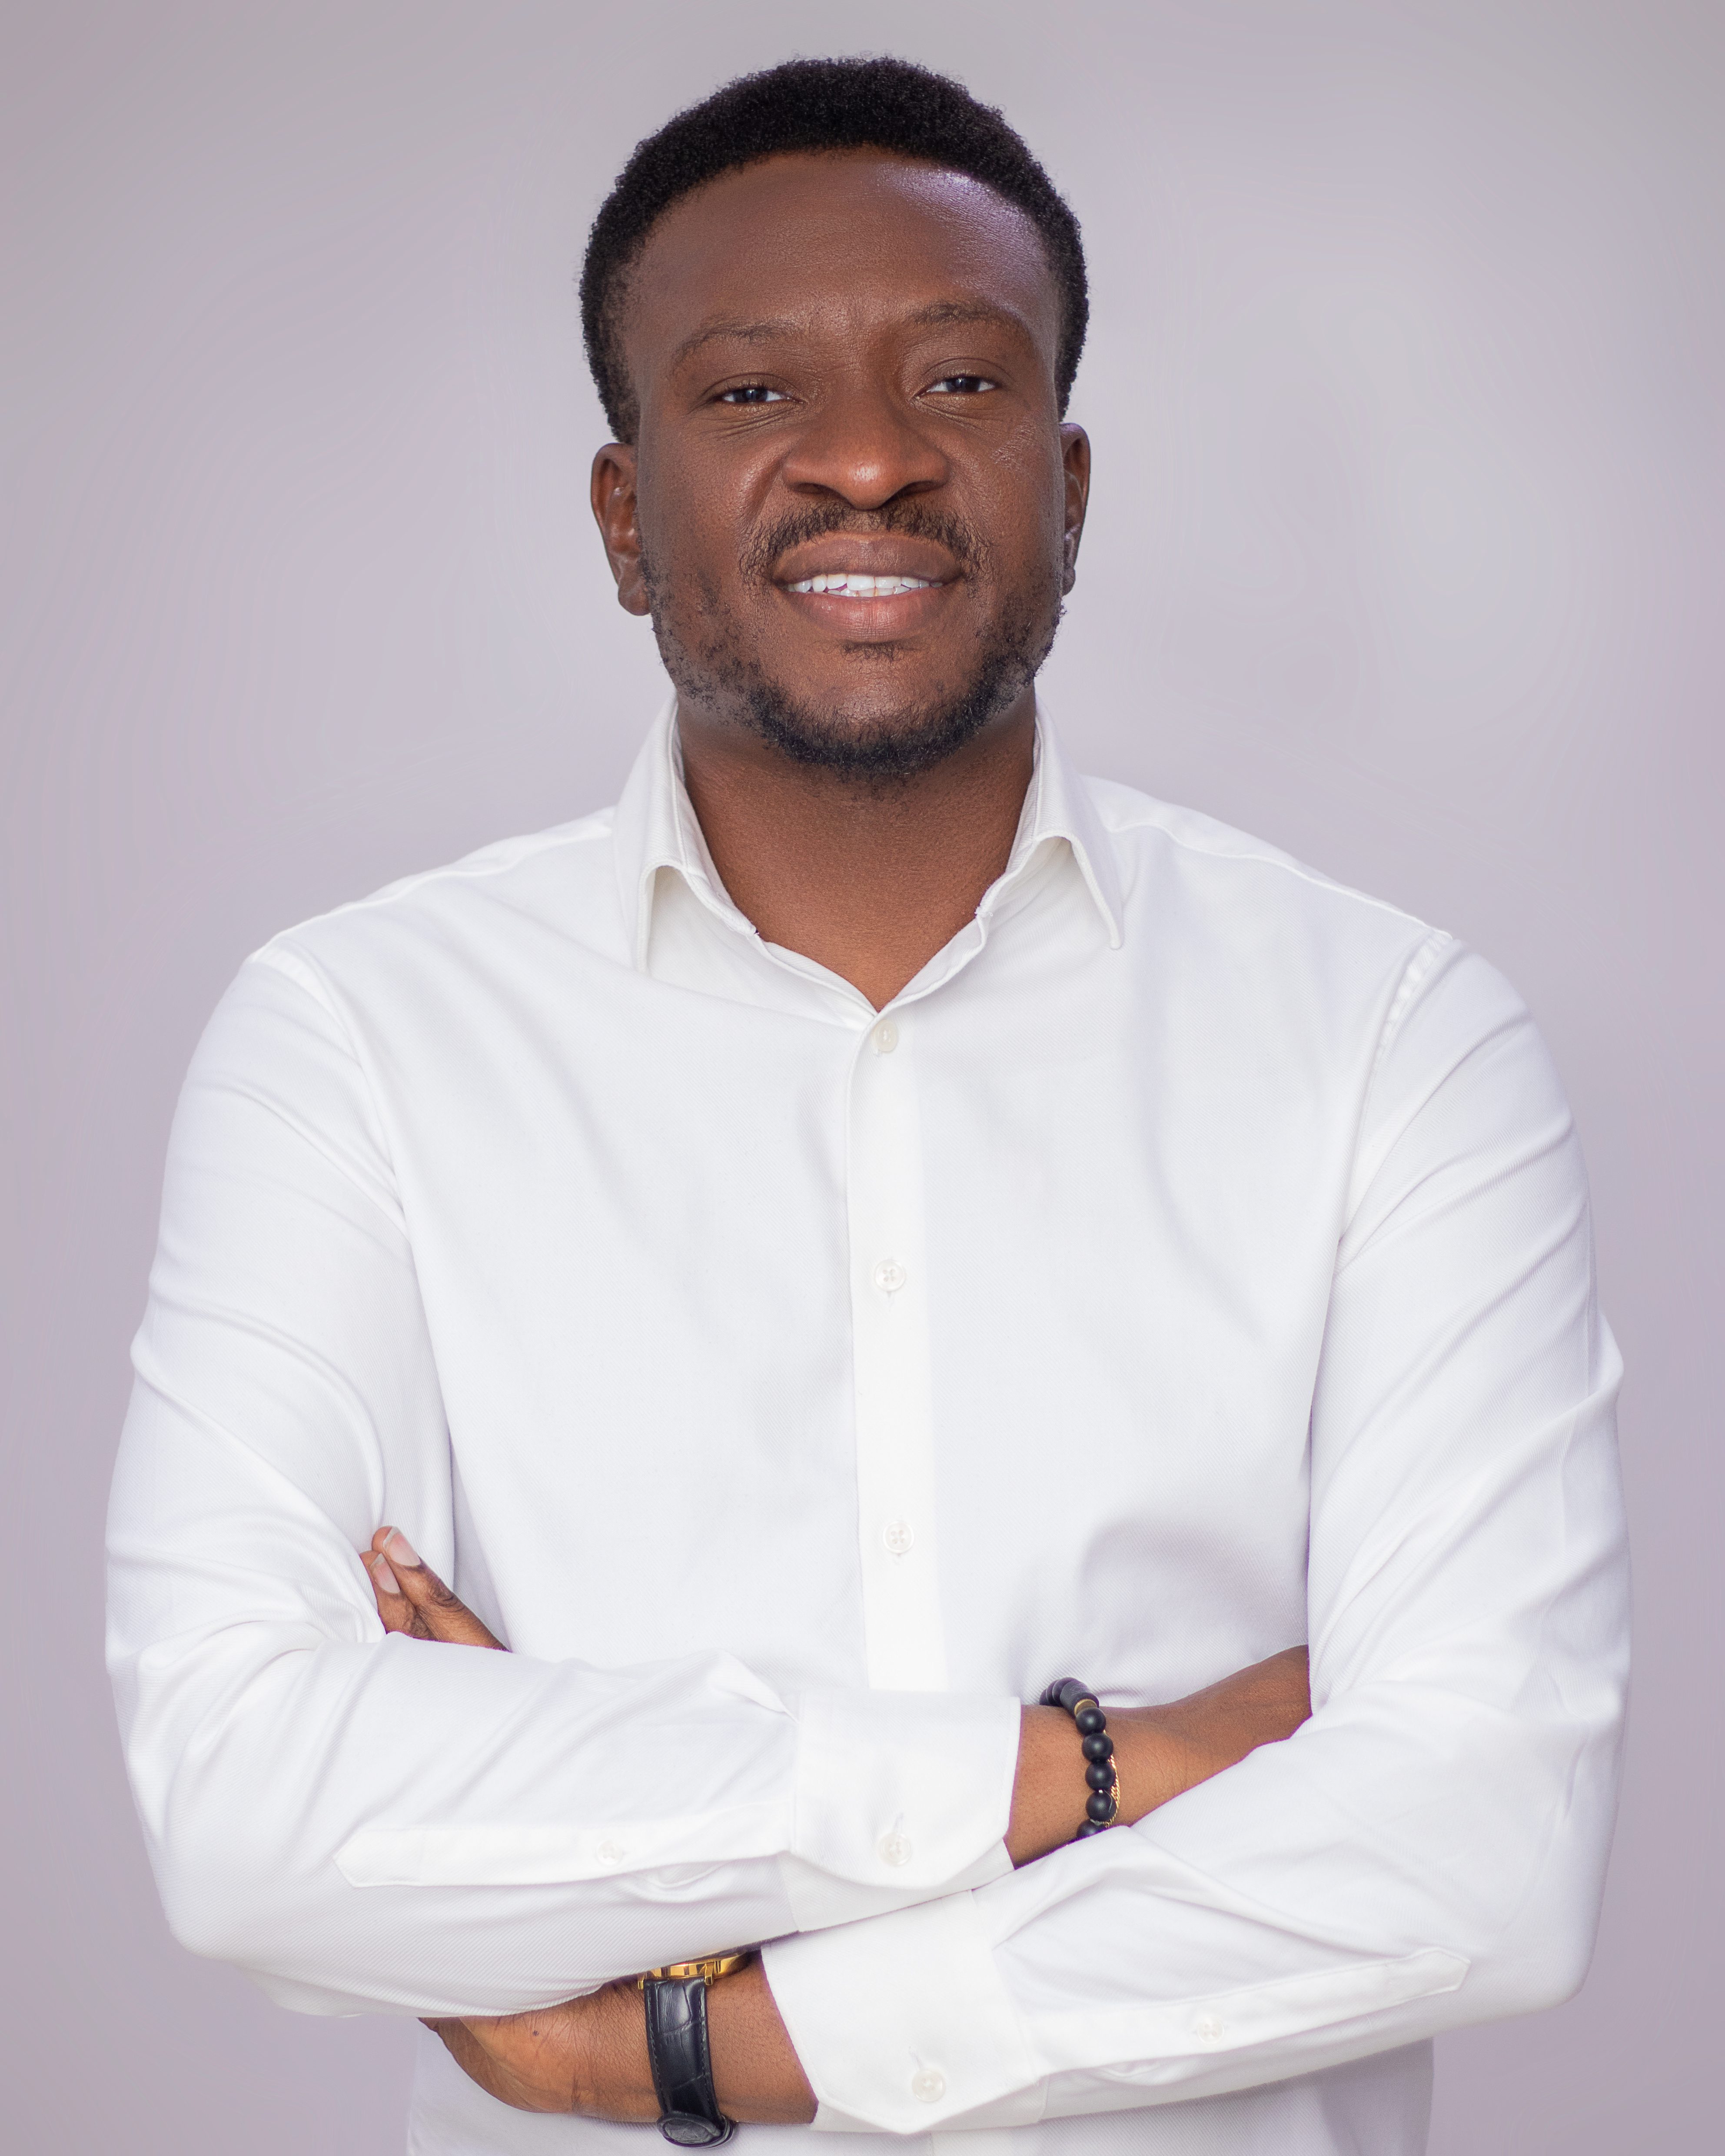 Olanrewaju Ogundipe wants to revamp the Nigerian edtech industry